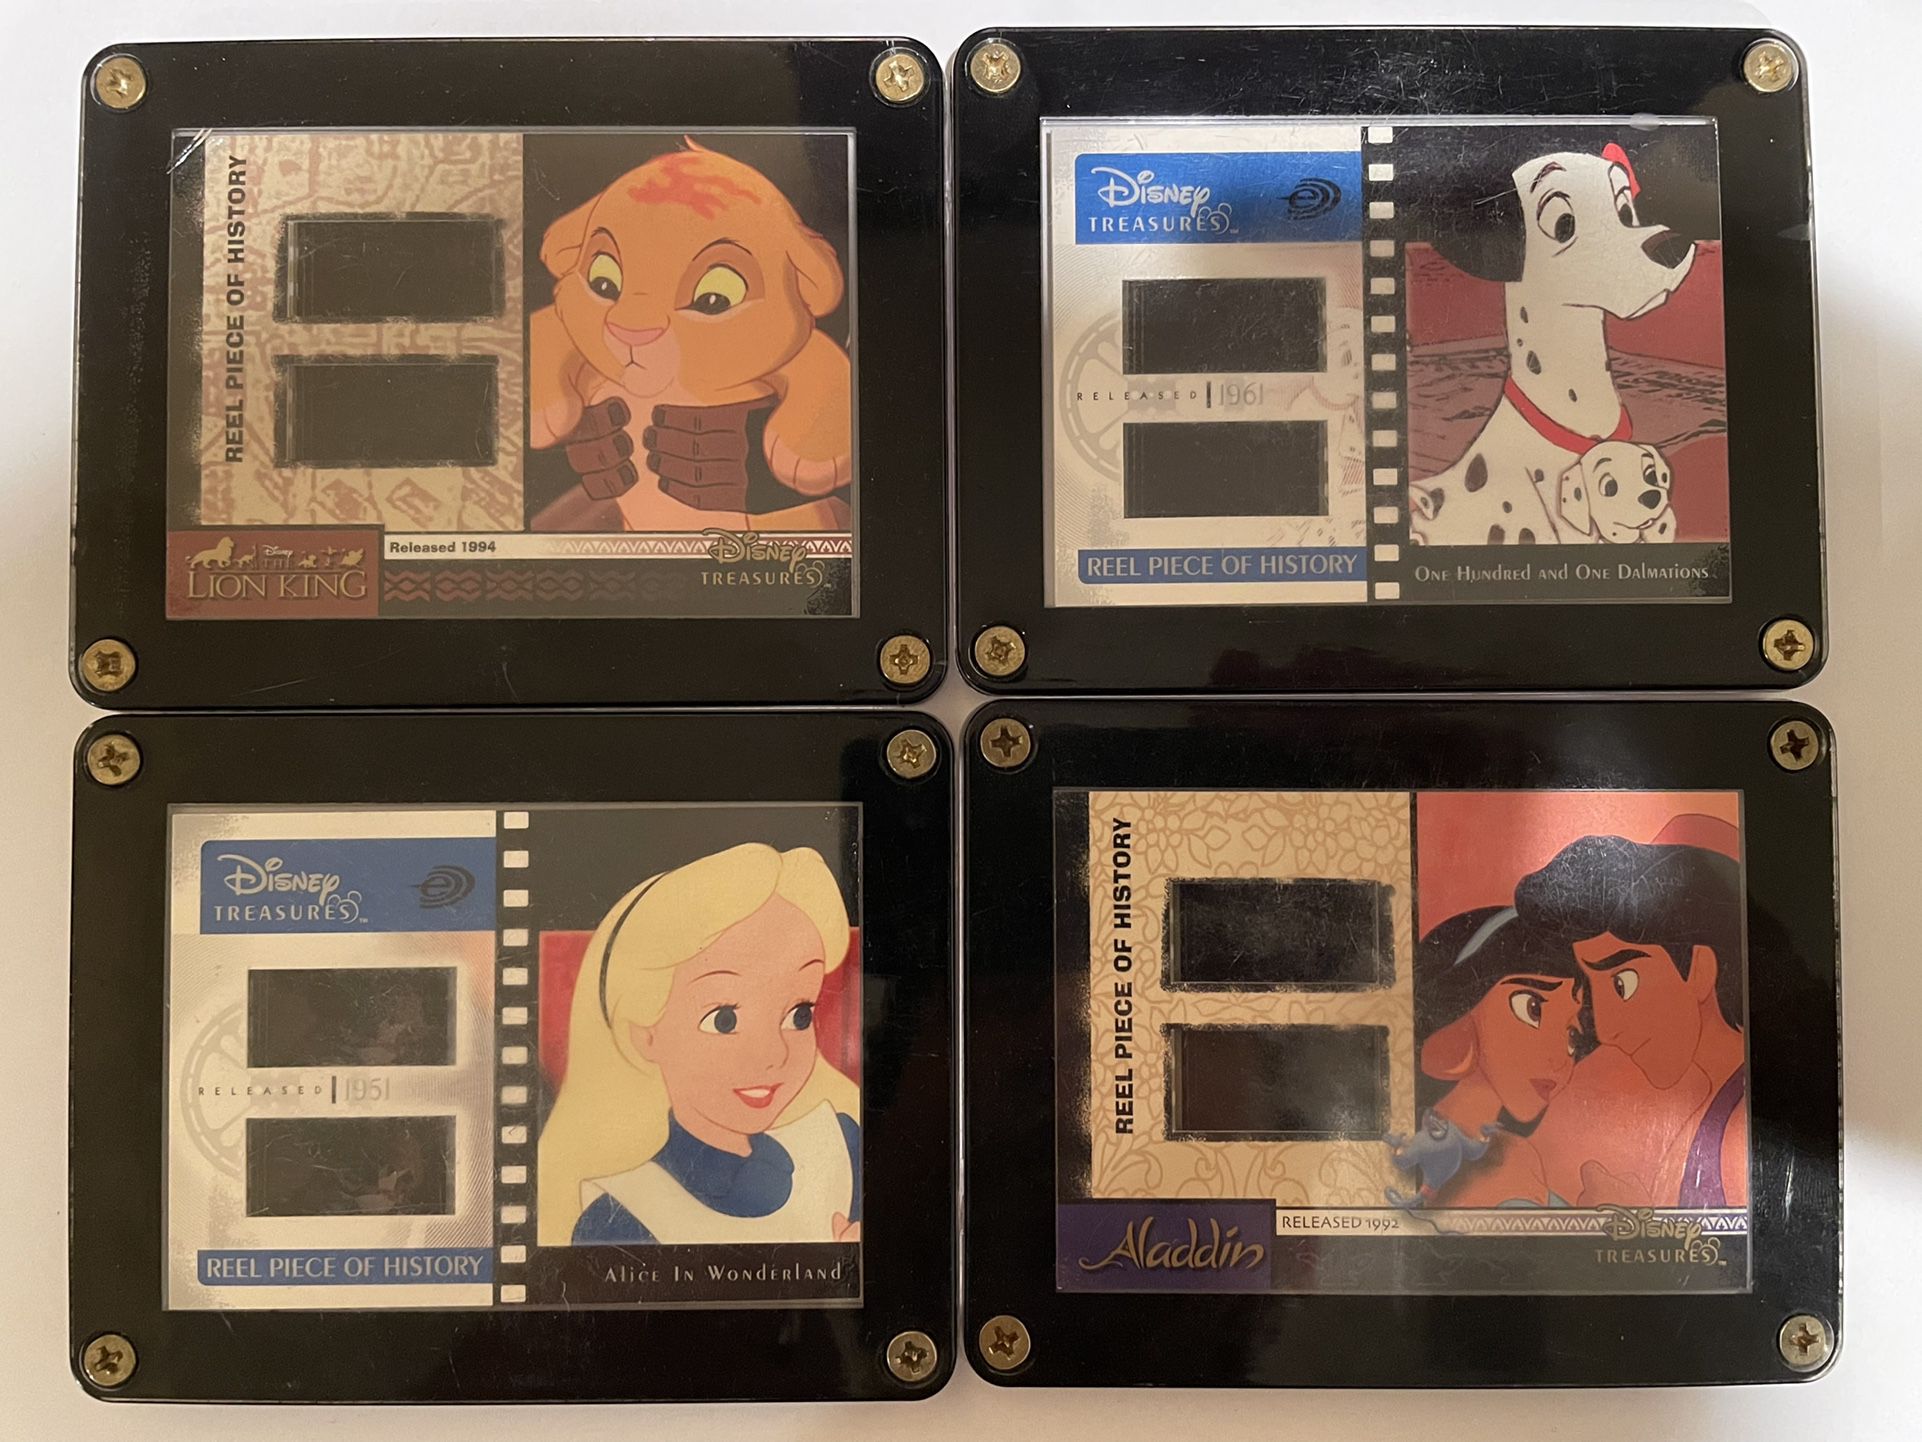 Disney Treasures - Reel Piece of History (Trading Cards)